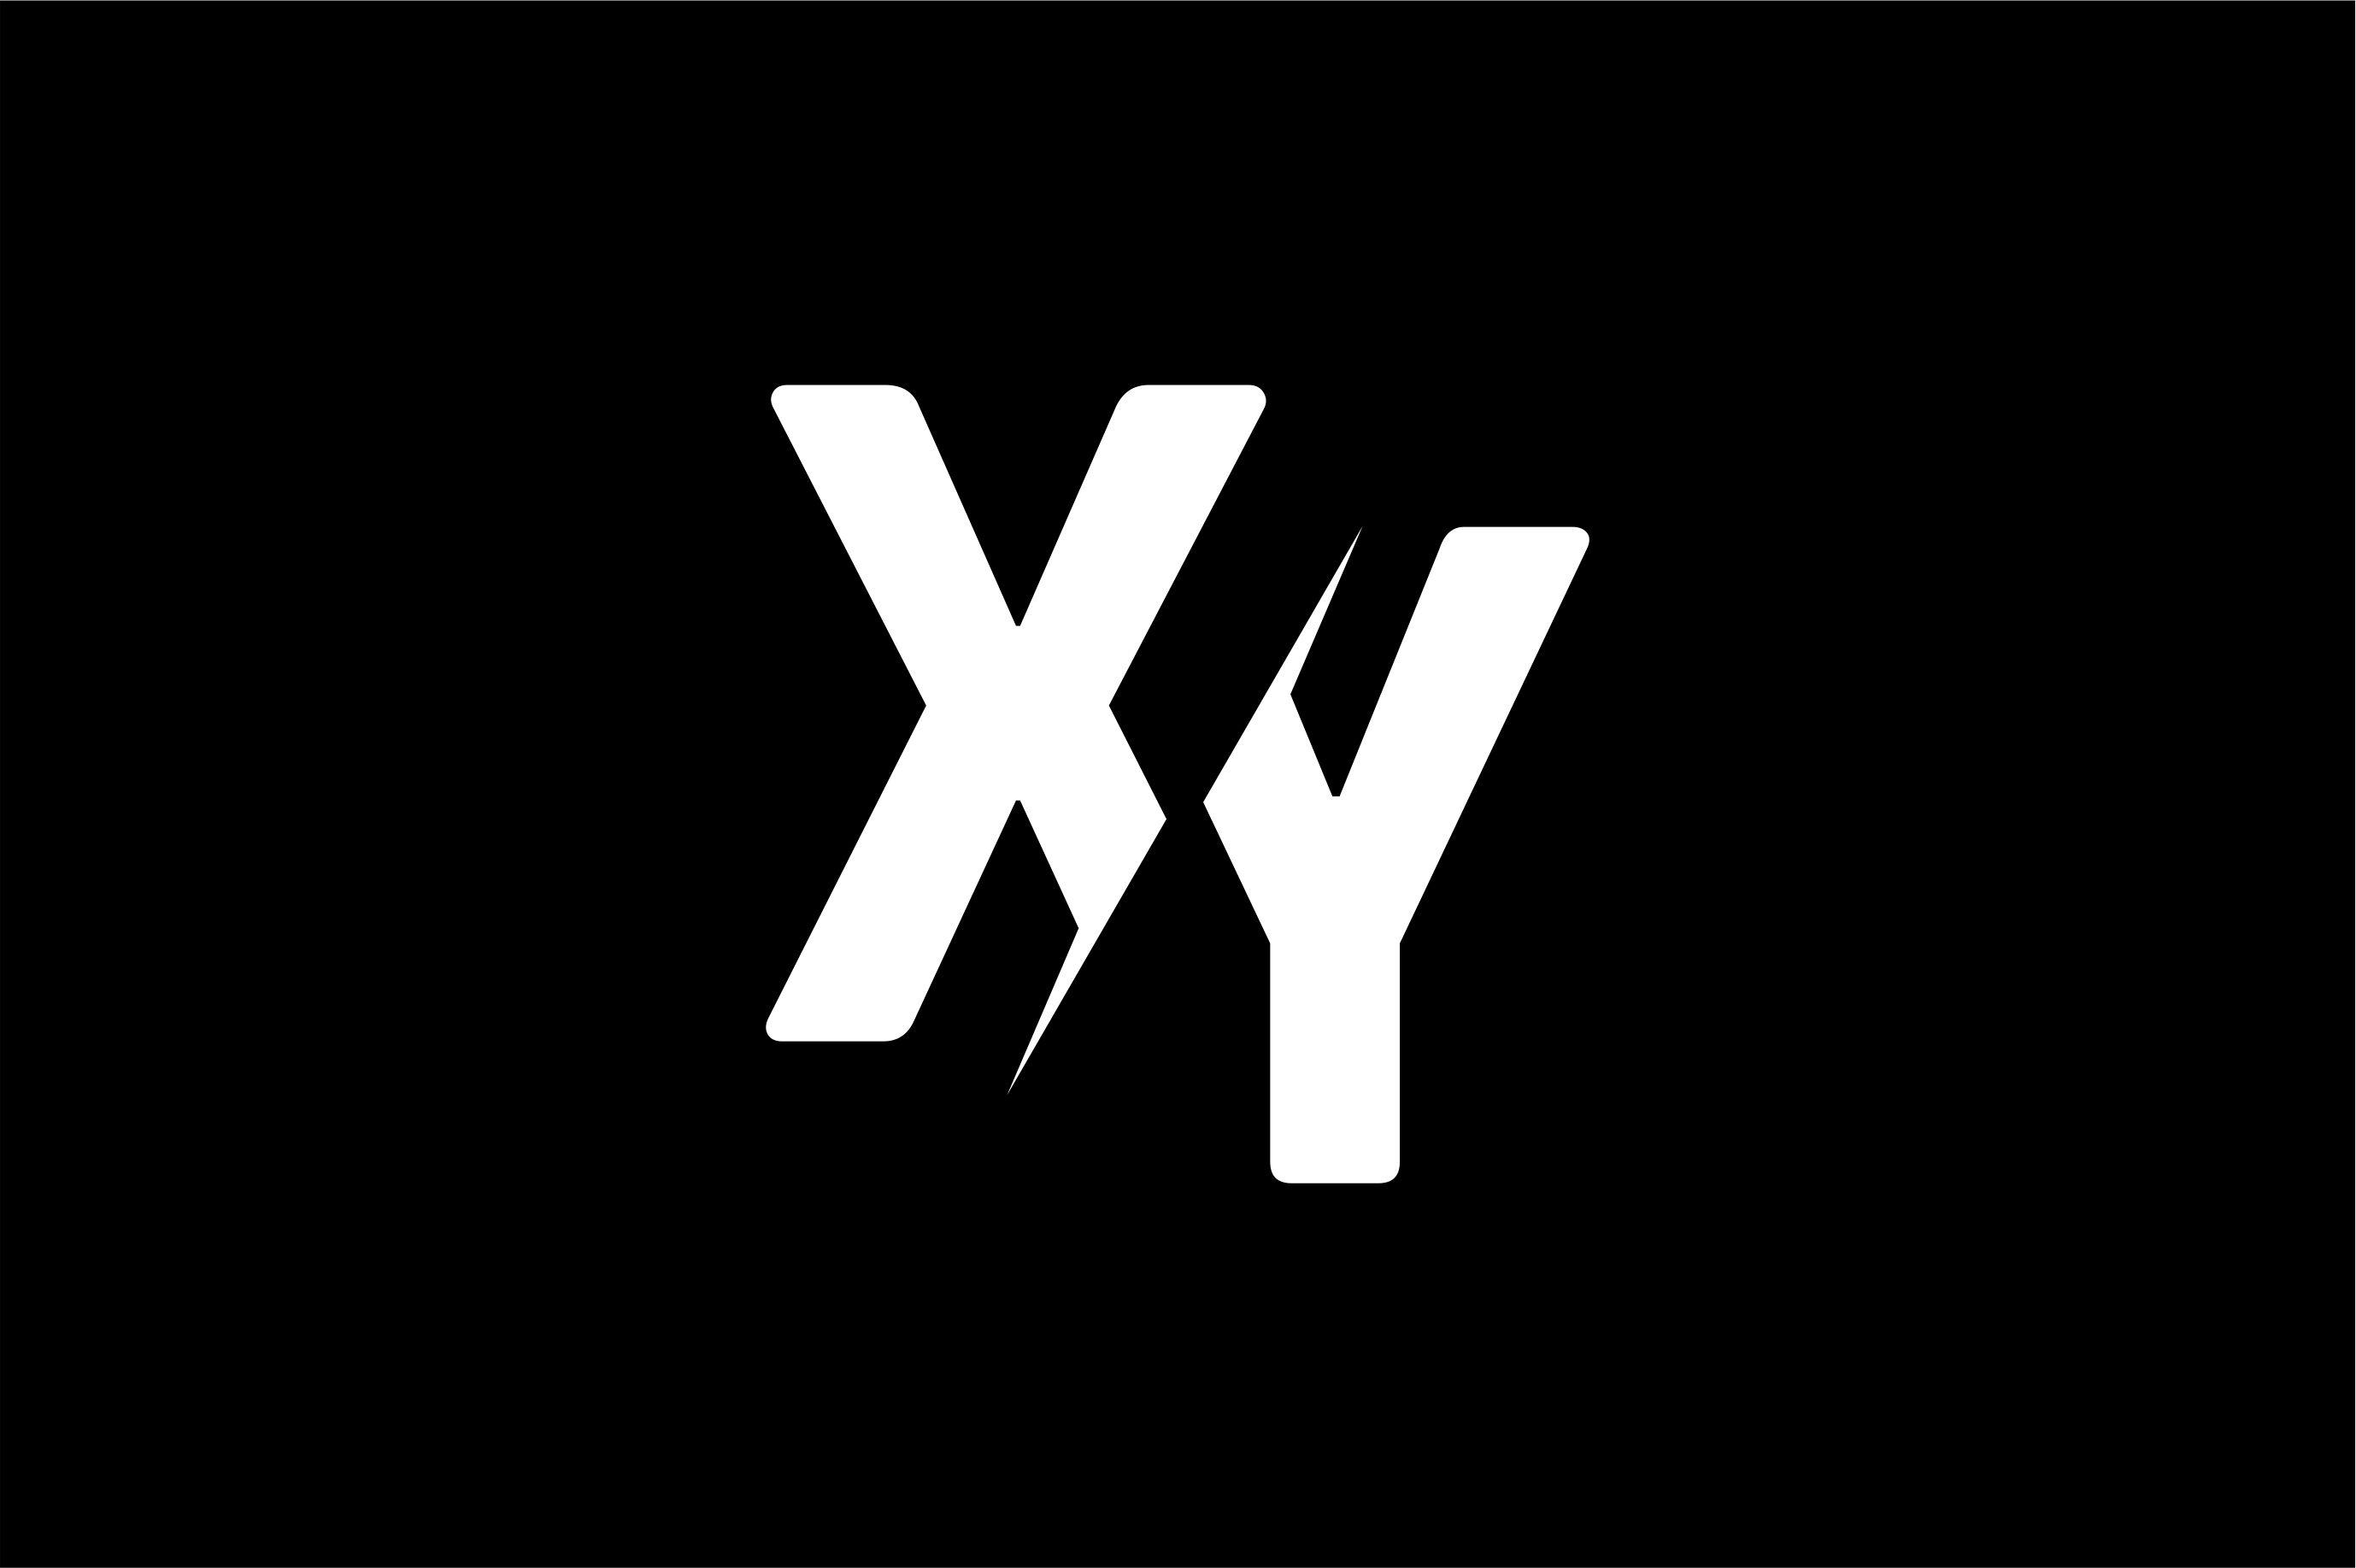 S y com. Логотип y. Логотип XY. Логотип с буквой y. Логотип на IY.